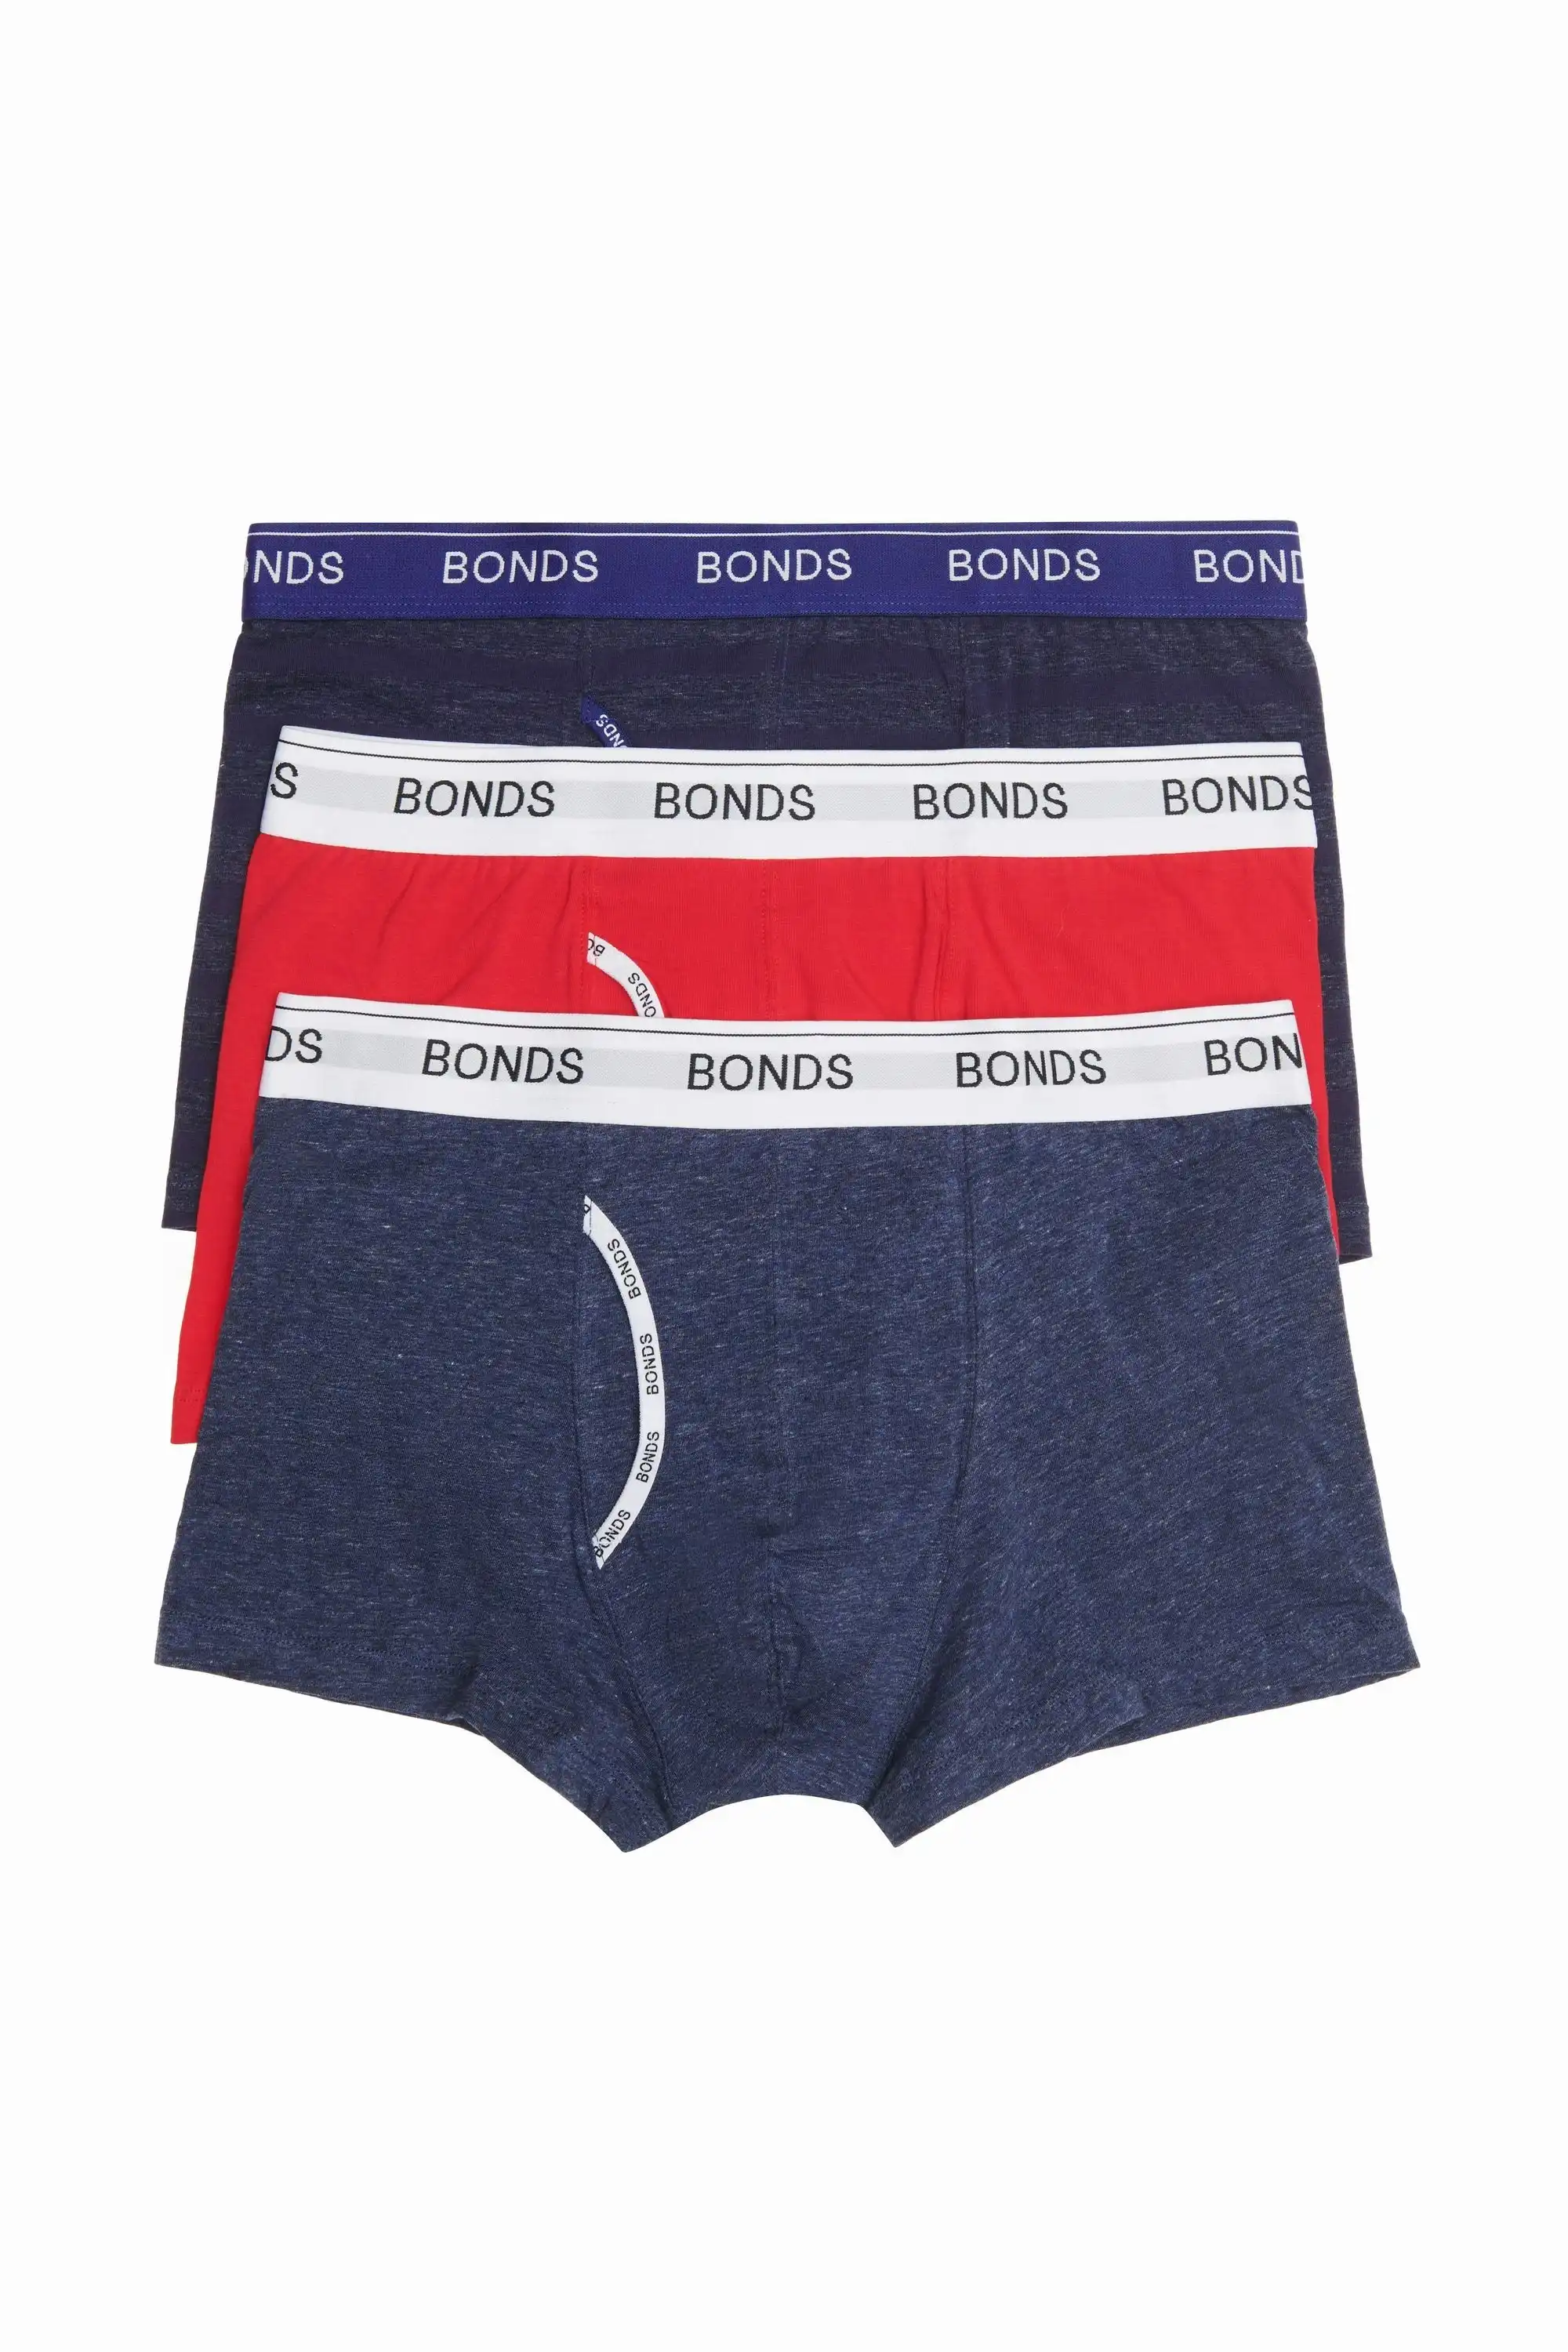 Mens Bonds Side Seamfree Trunk Trunks Black Navy Mens Underwear Shorts  Boxer, Australian Fashion Boutique